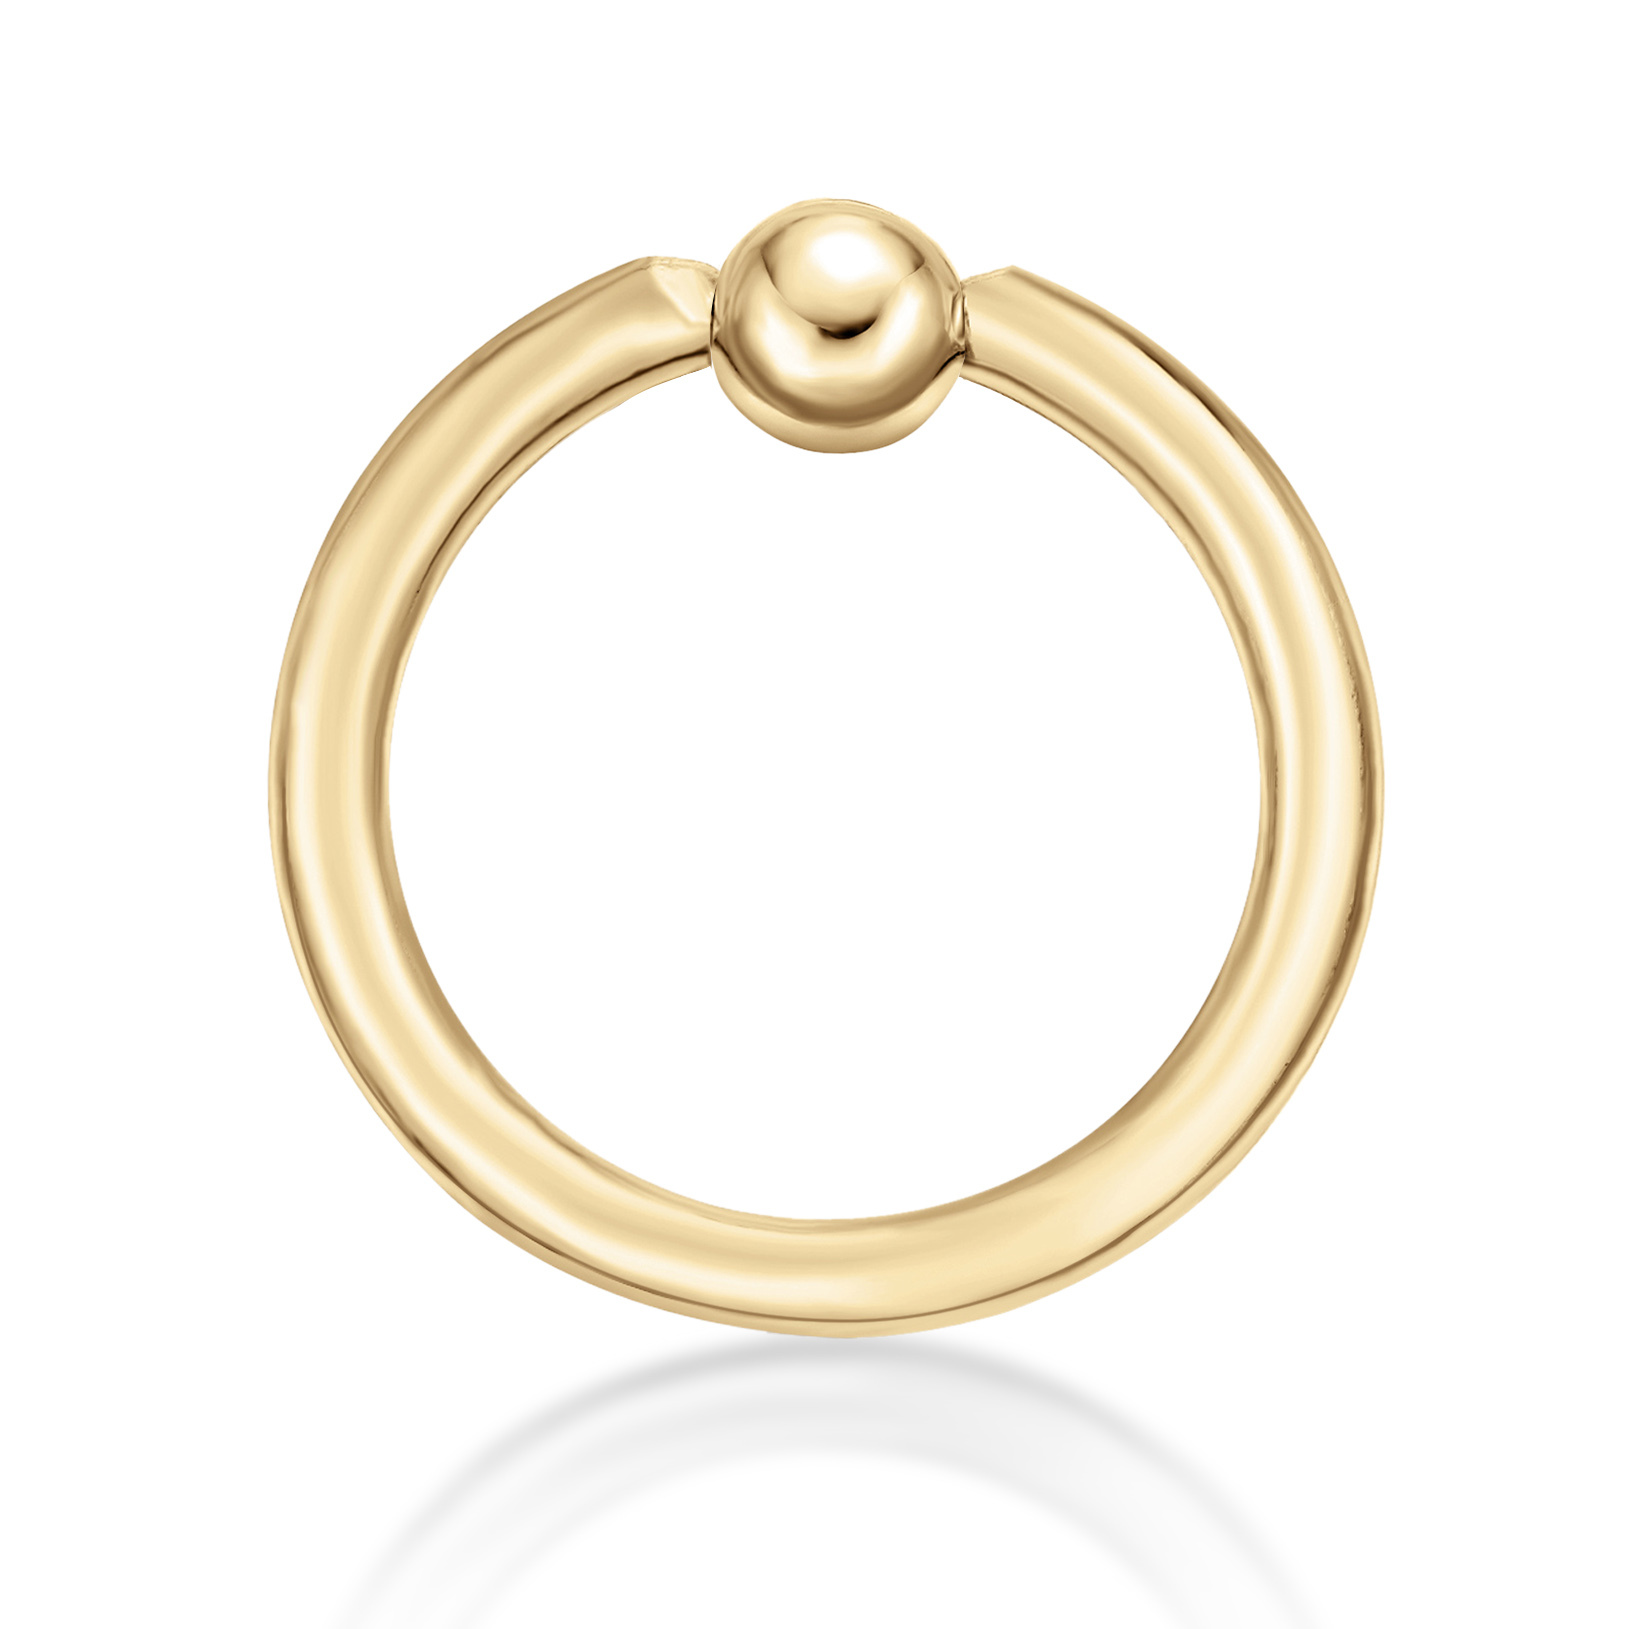 44604-nipple-ring-the-piercer-yellow-gold-44604-3.jpg